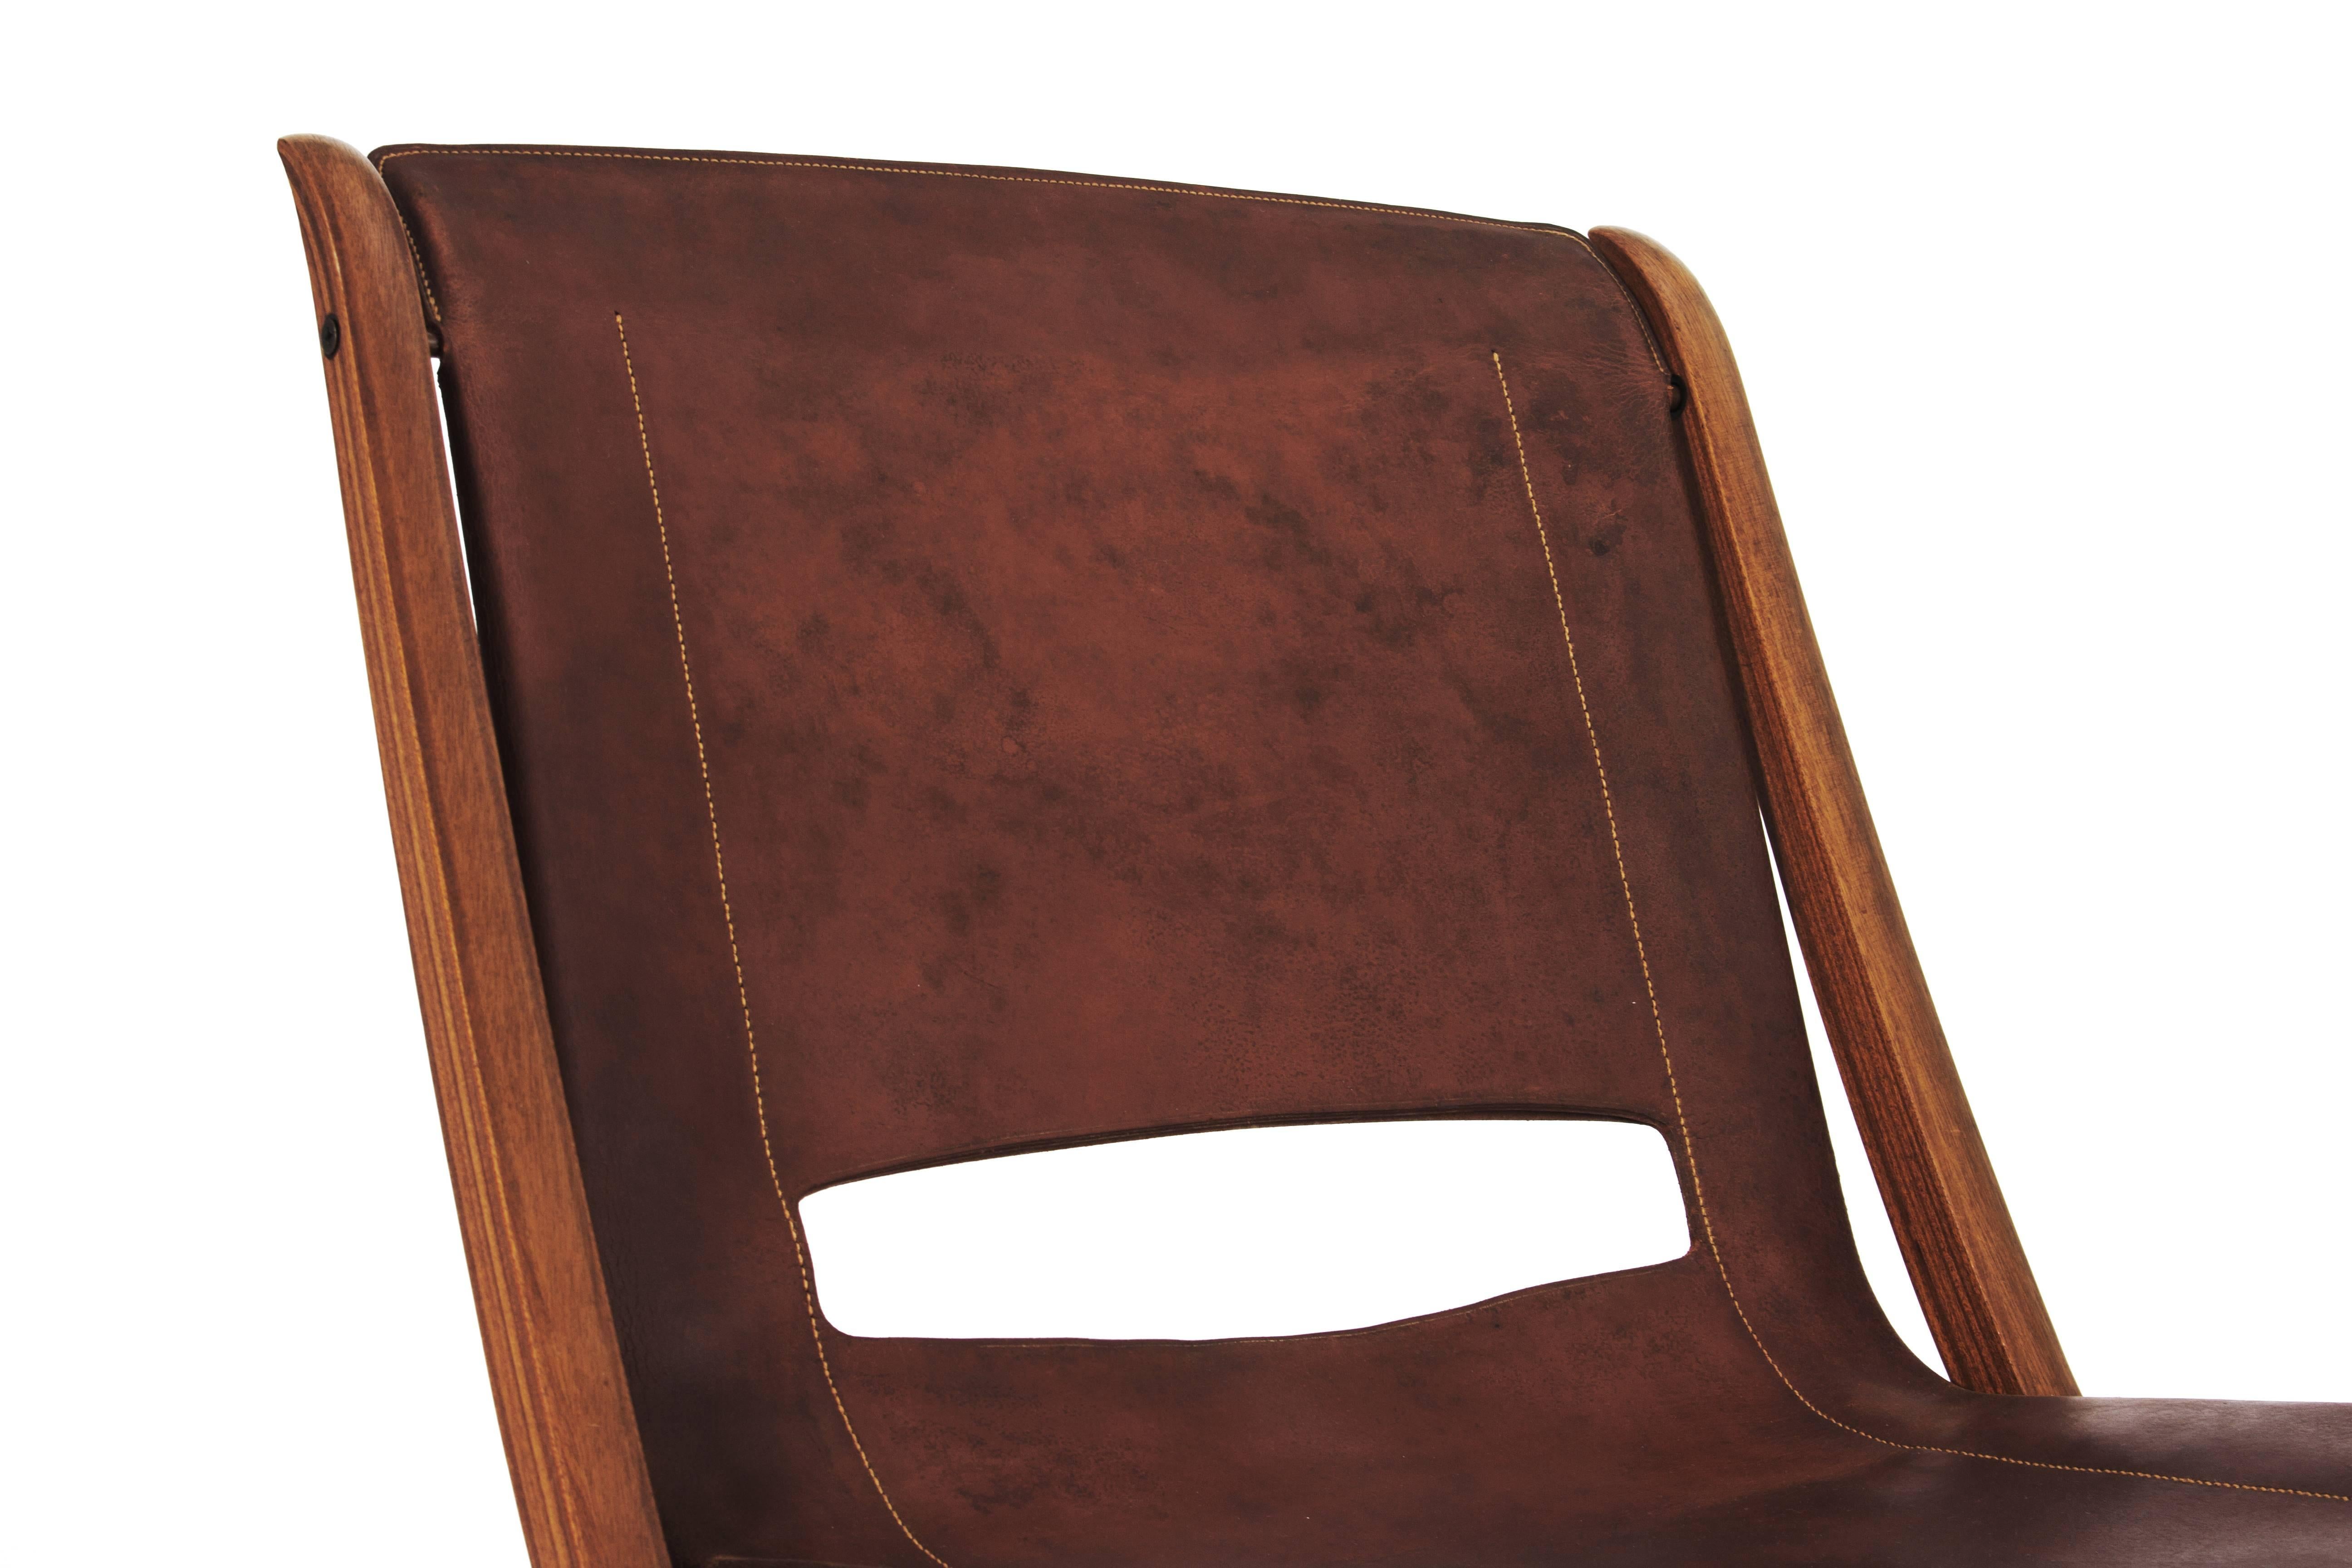 Danish Midcentury 'X' Chair in Cognac Leather by Peter Hvidt, Denmark, 1950s